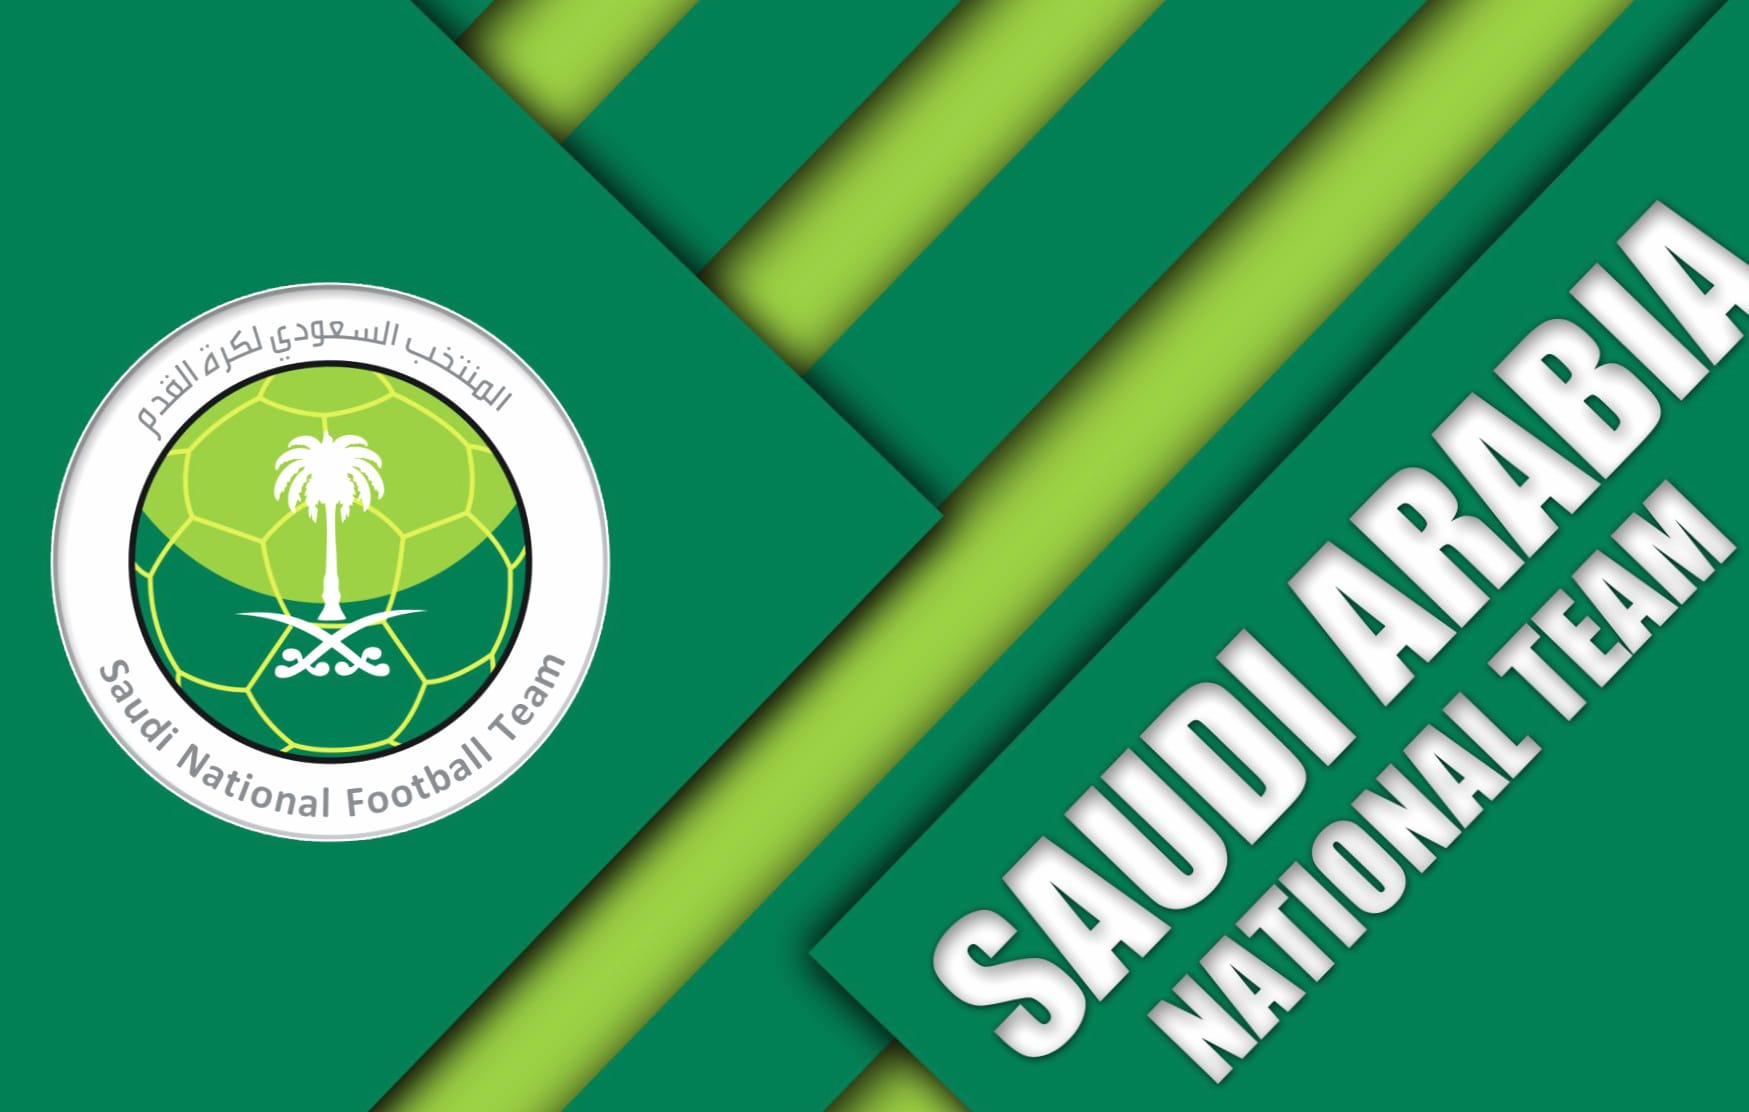 Saudi Arabia National Football Team at 1280 x 960 size wallpapers HD quality